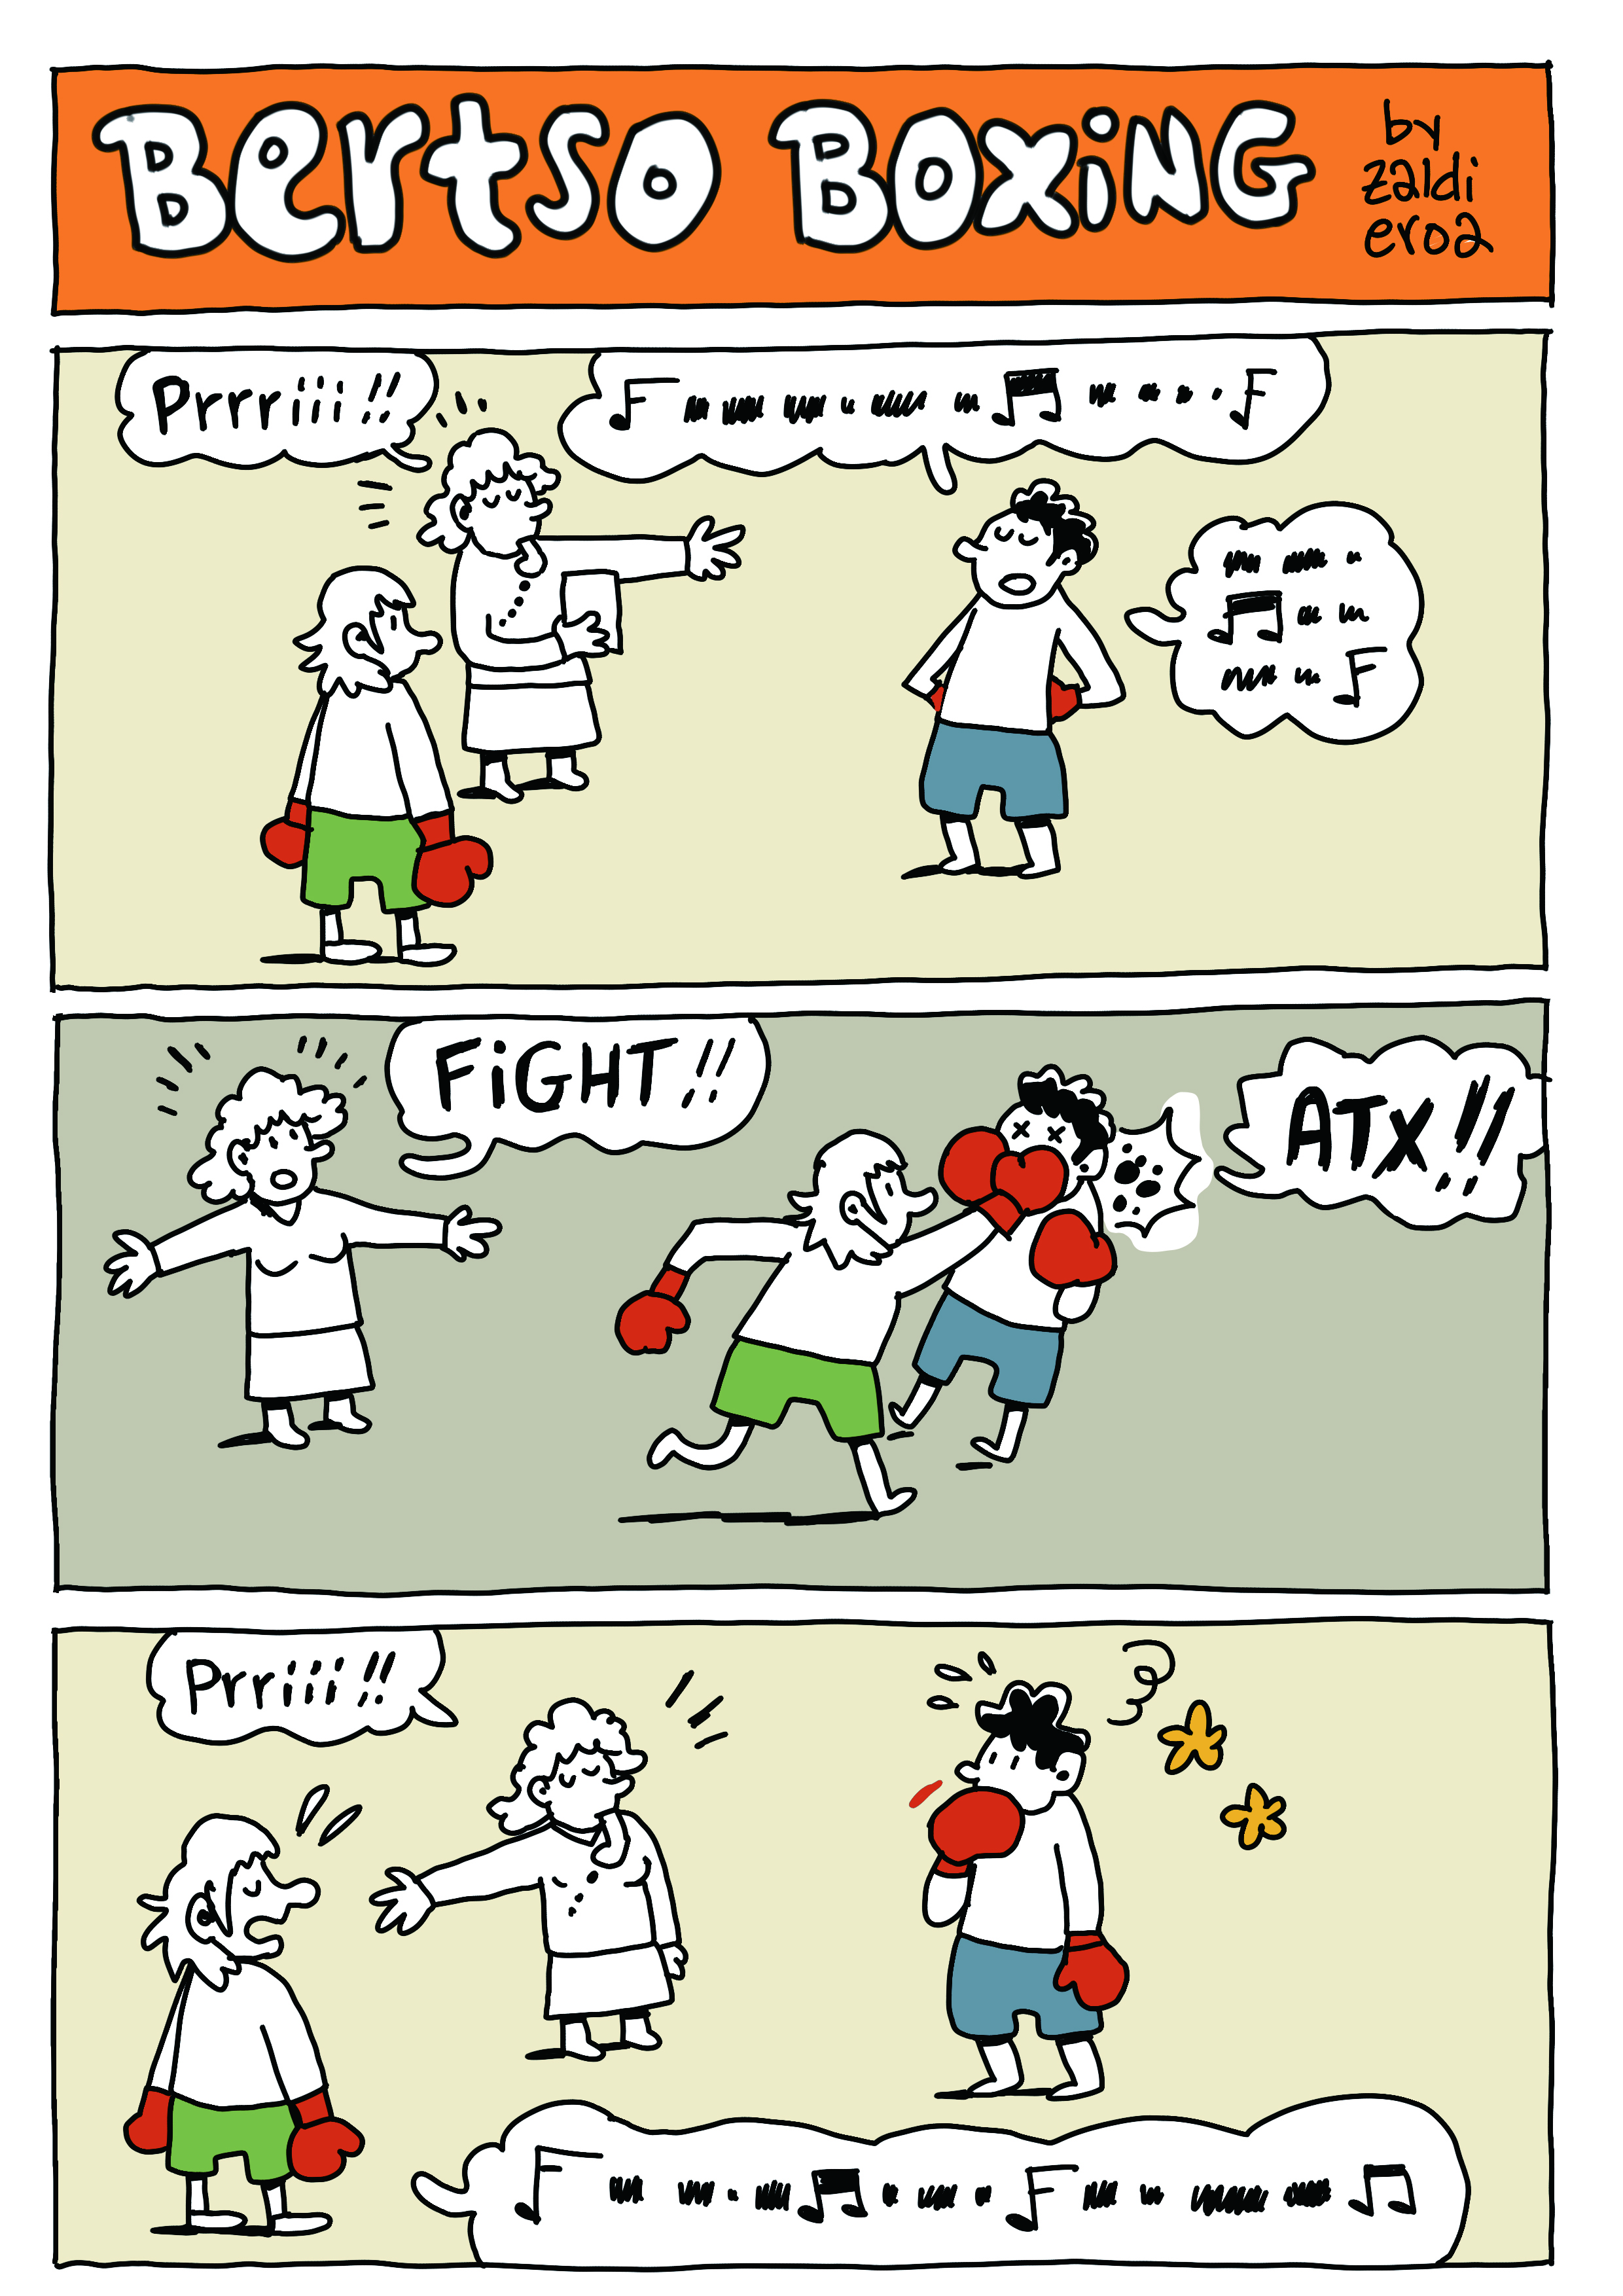 Bertso boxing